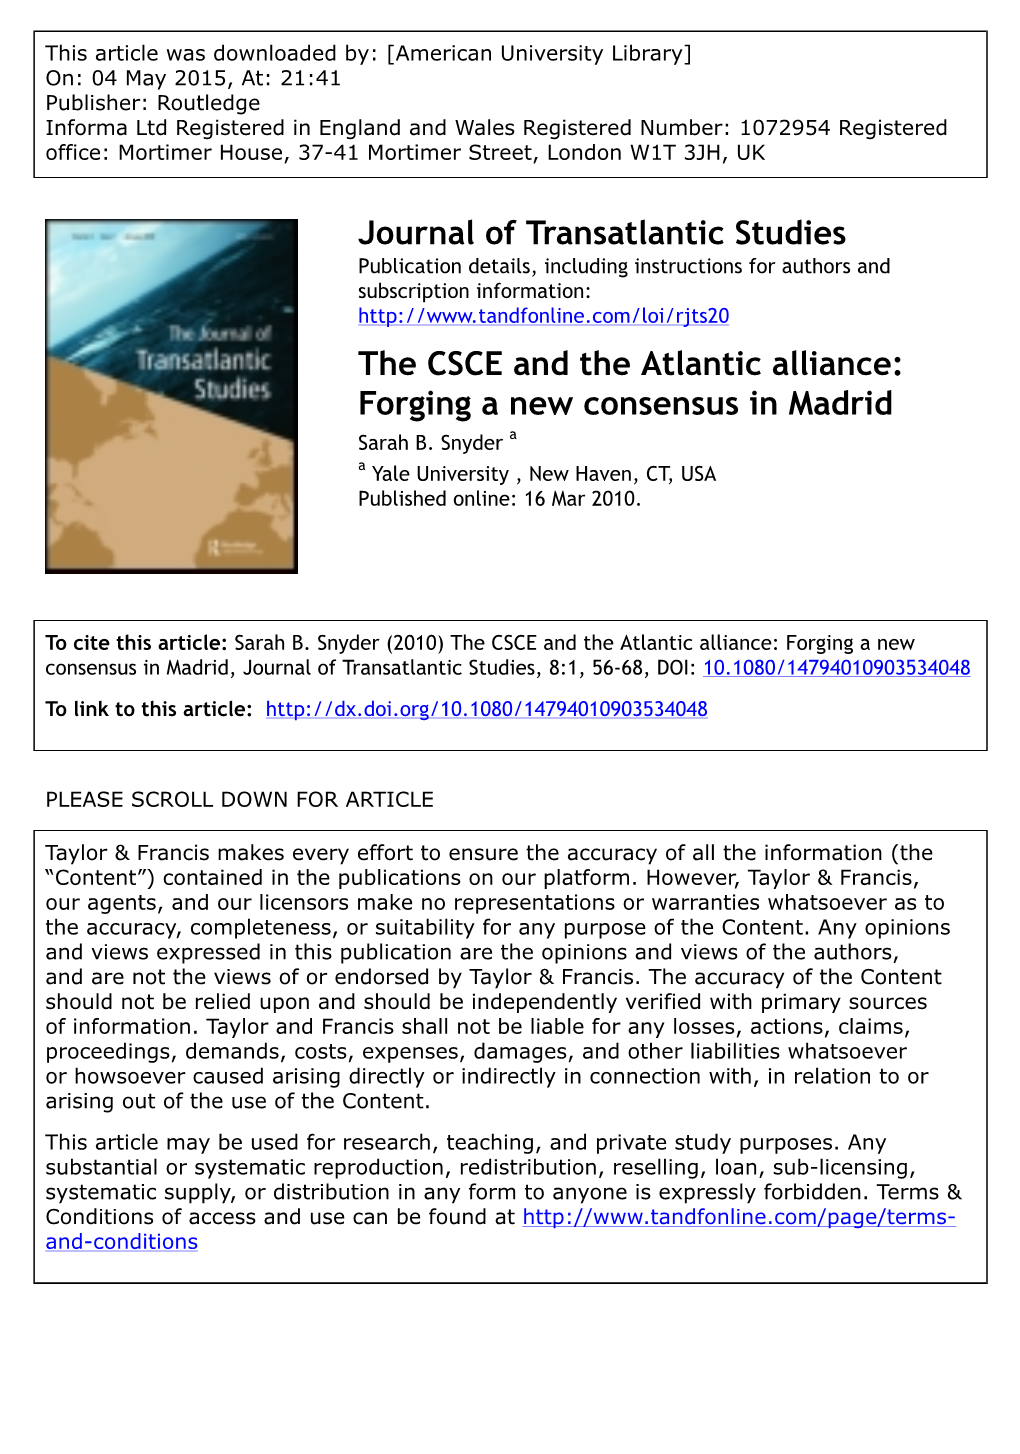 Journal of Transatlantic Studies the CSCE and the Atlantic Alliance